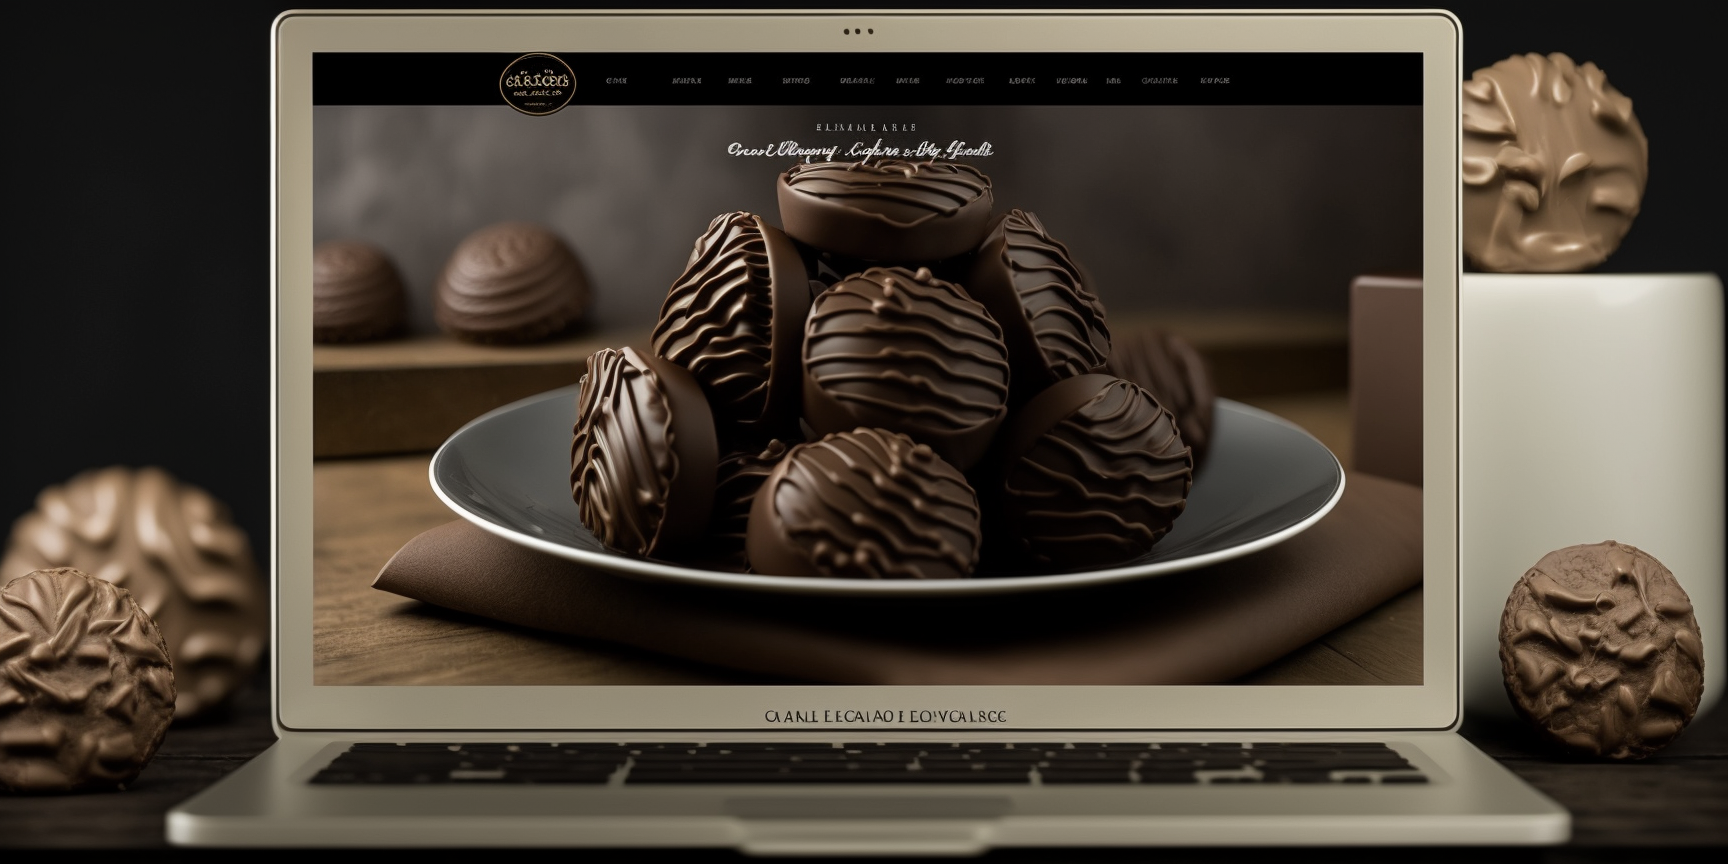 Sälja choklad i din egen webshop